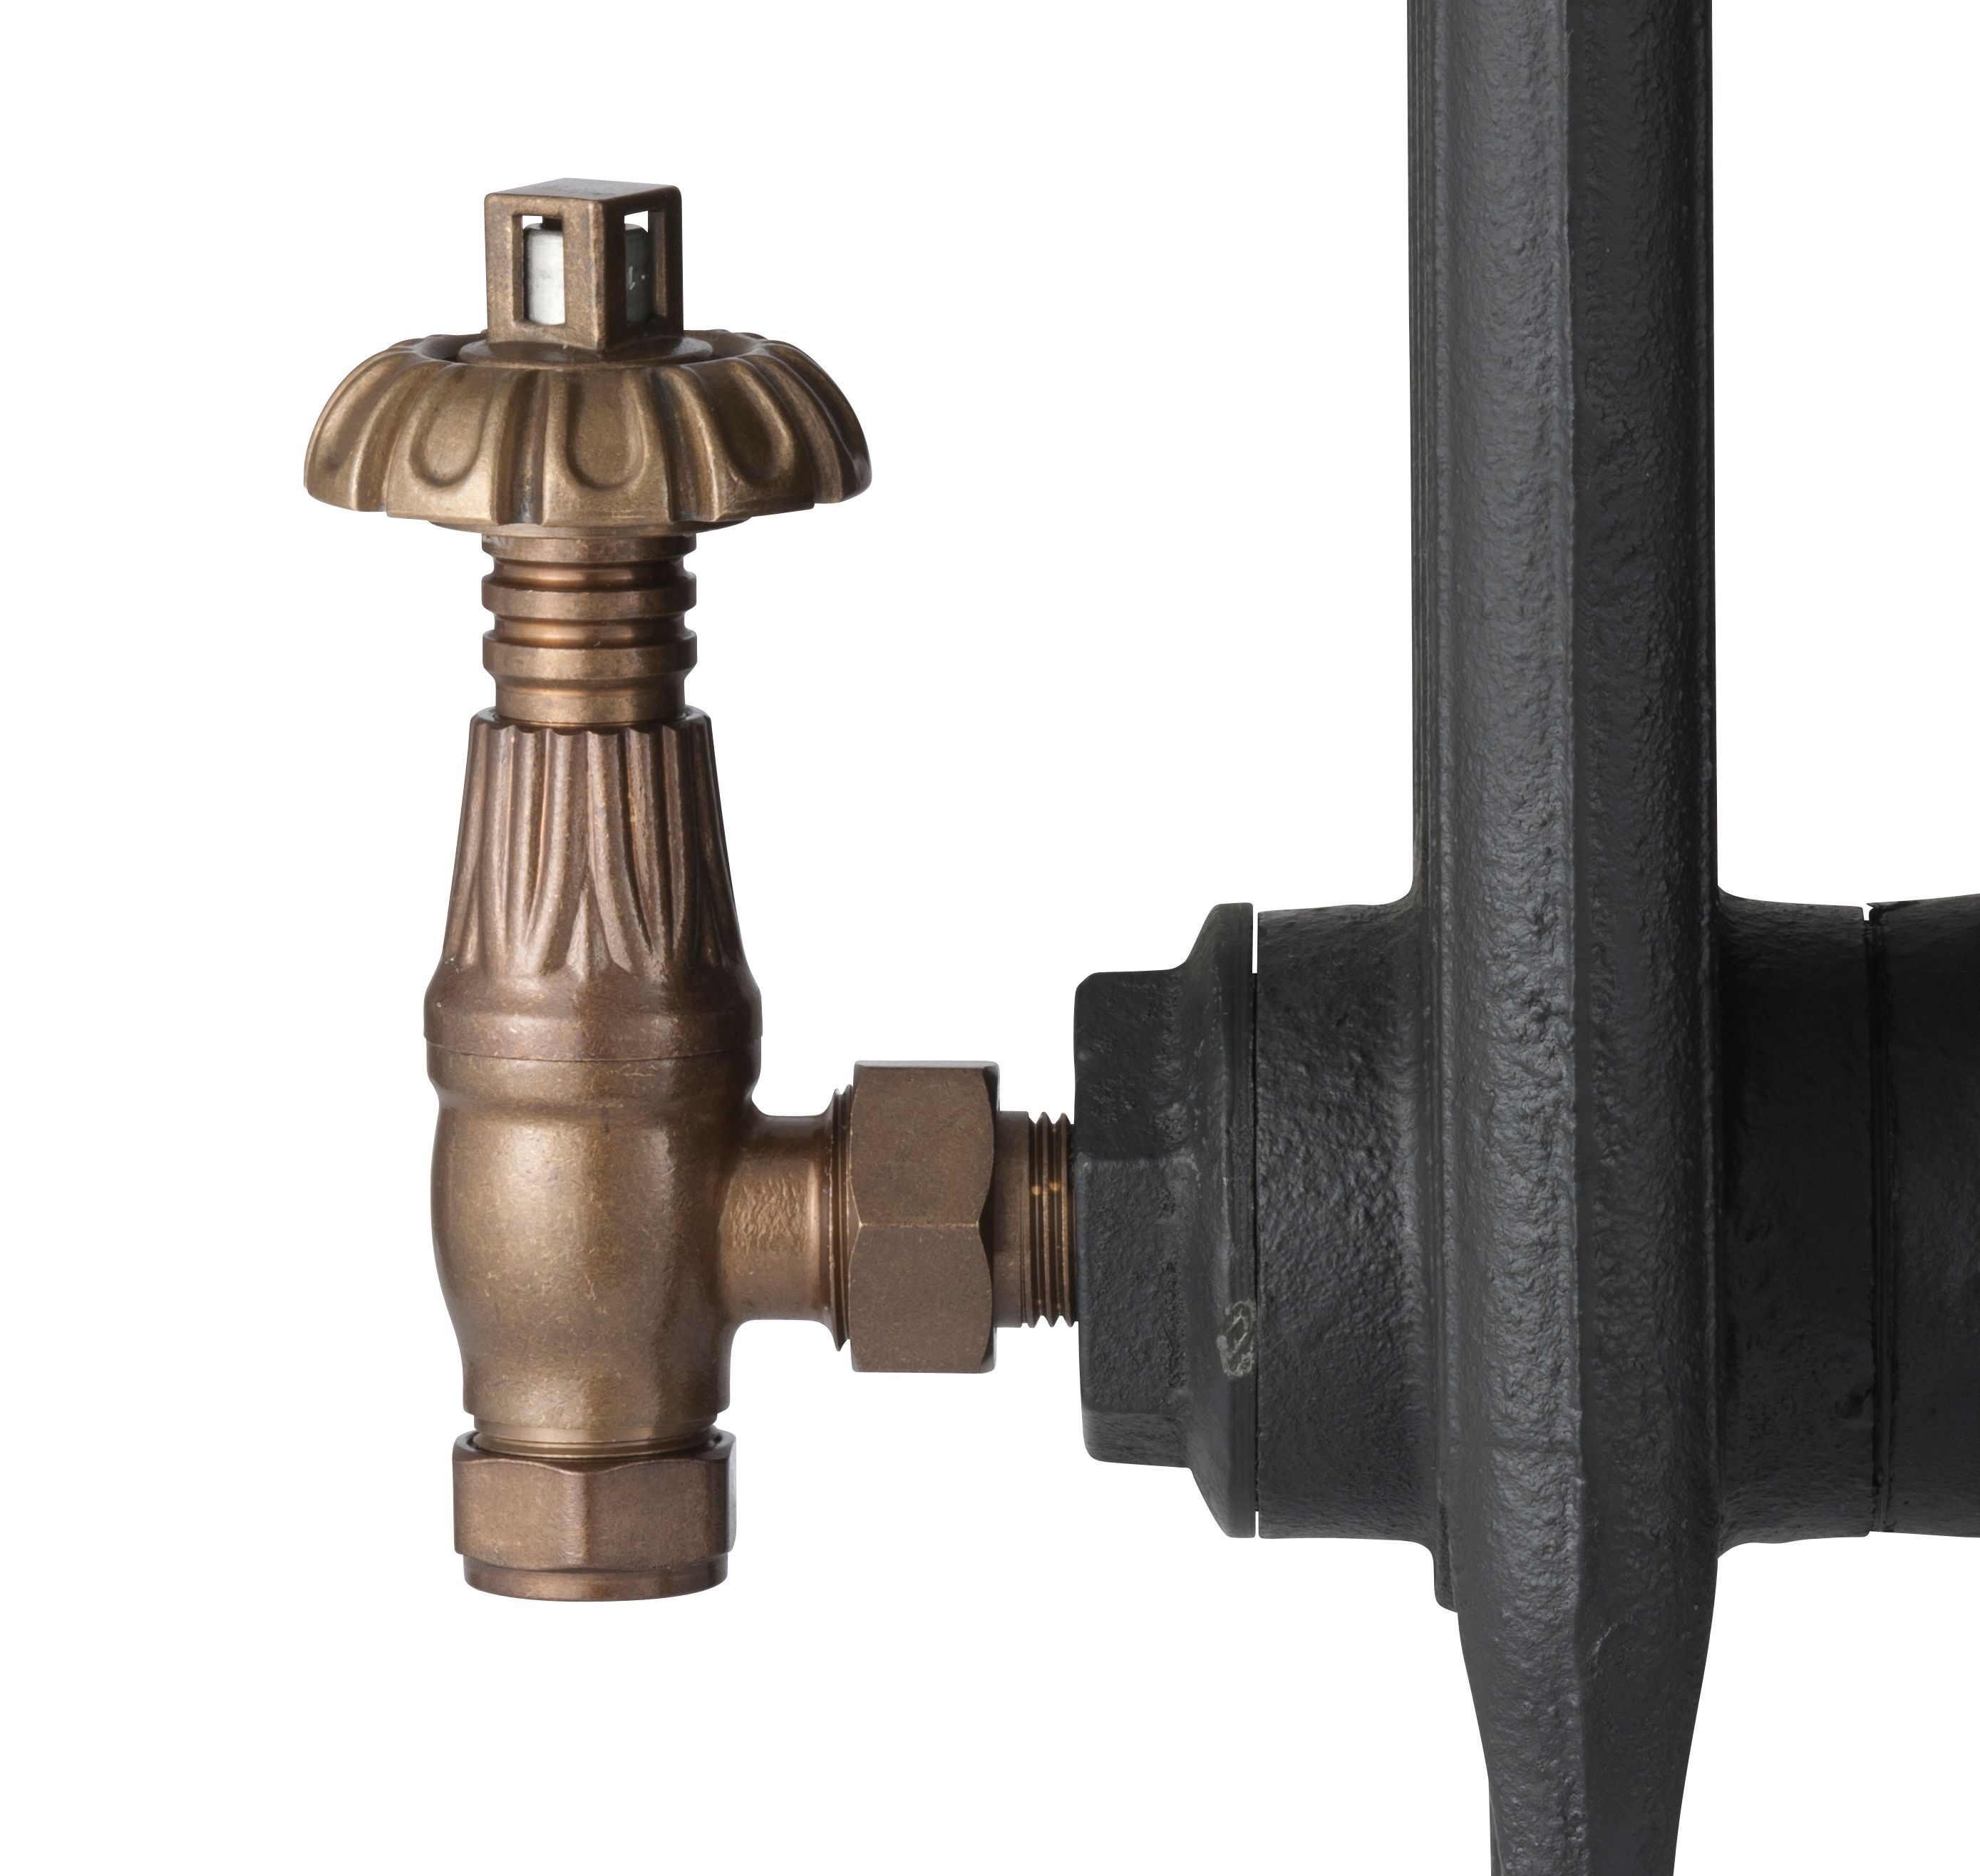 Arroll UK18 Antique brass Angled Thermostatic Radiator valve